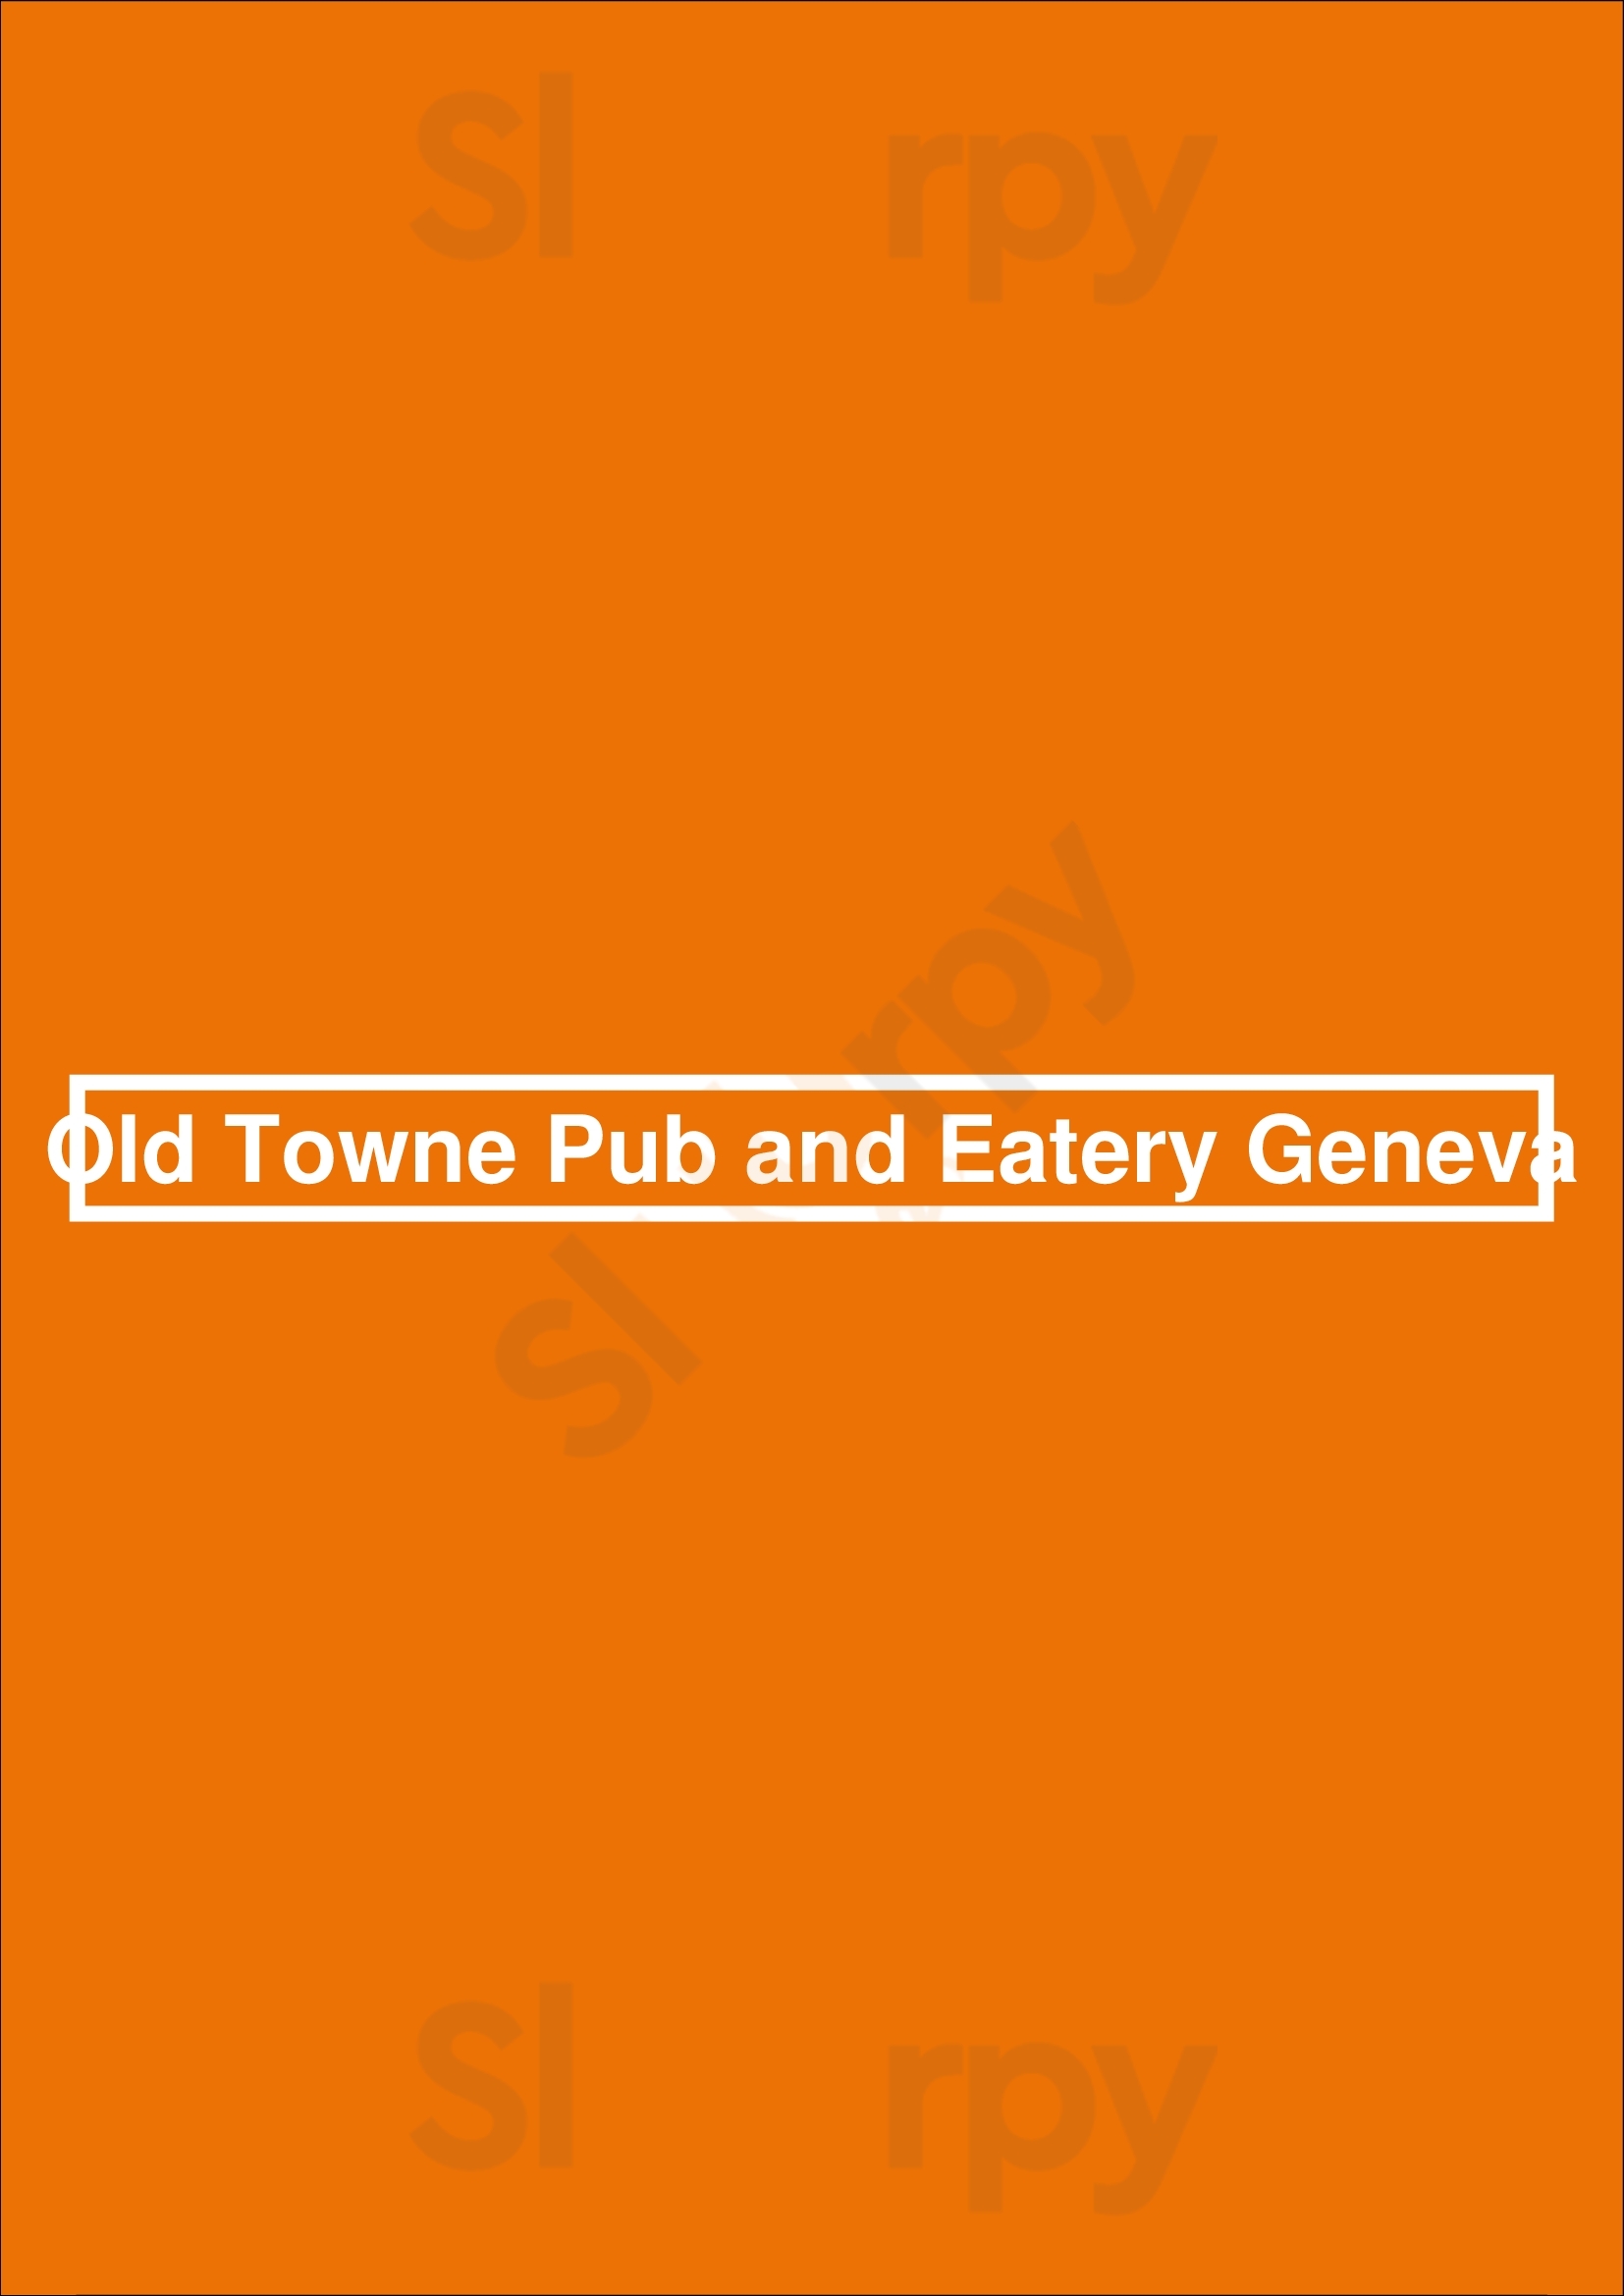 Old Towne Pub And Eatery Geneva Geneva Menu - 1